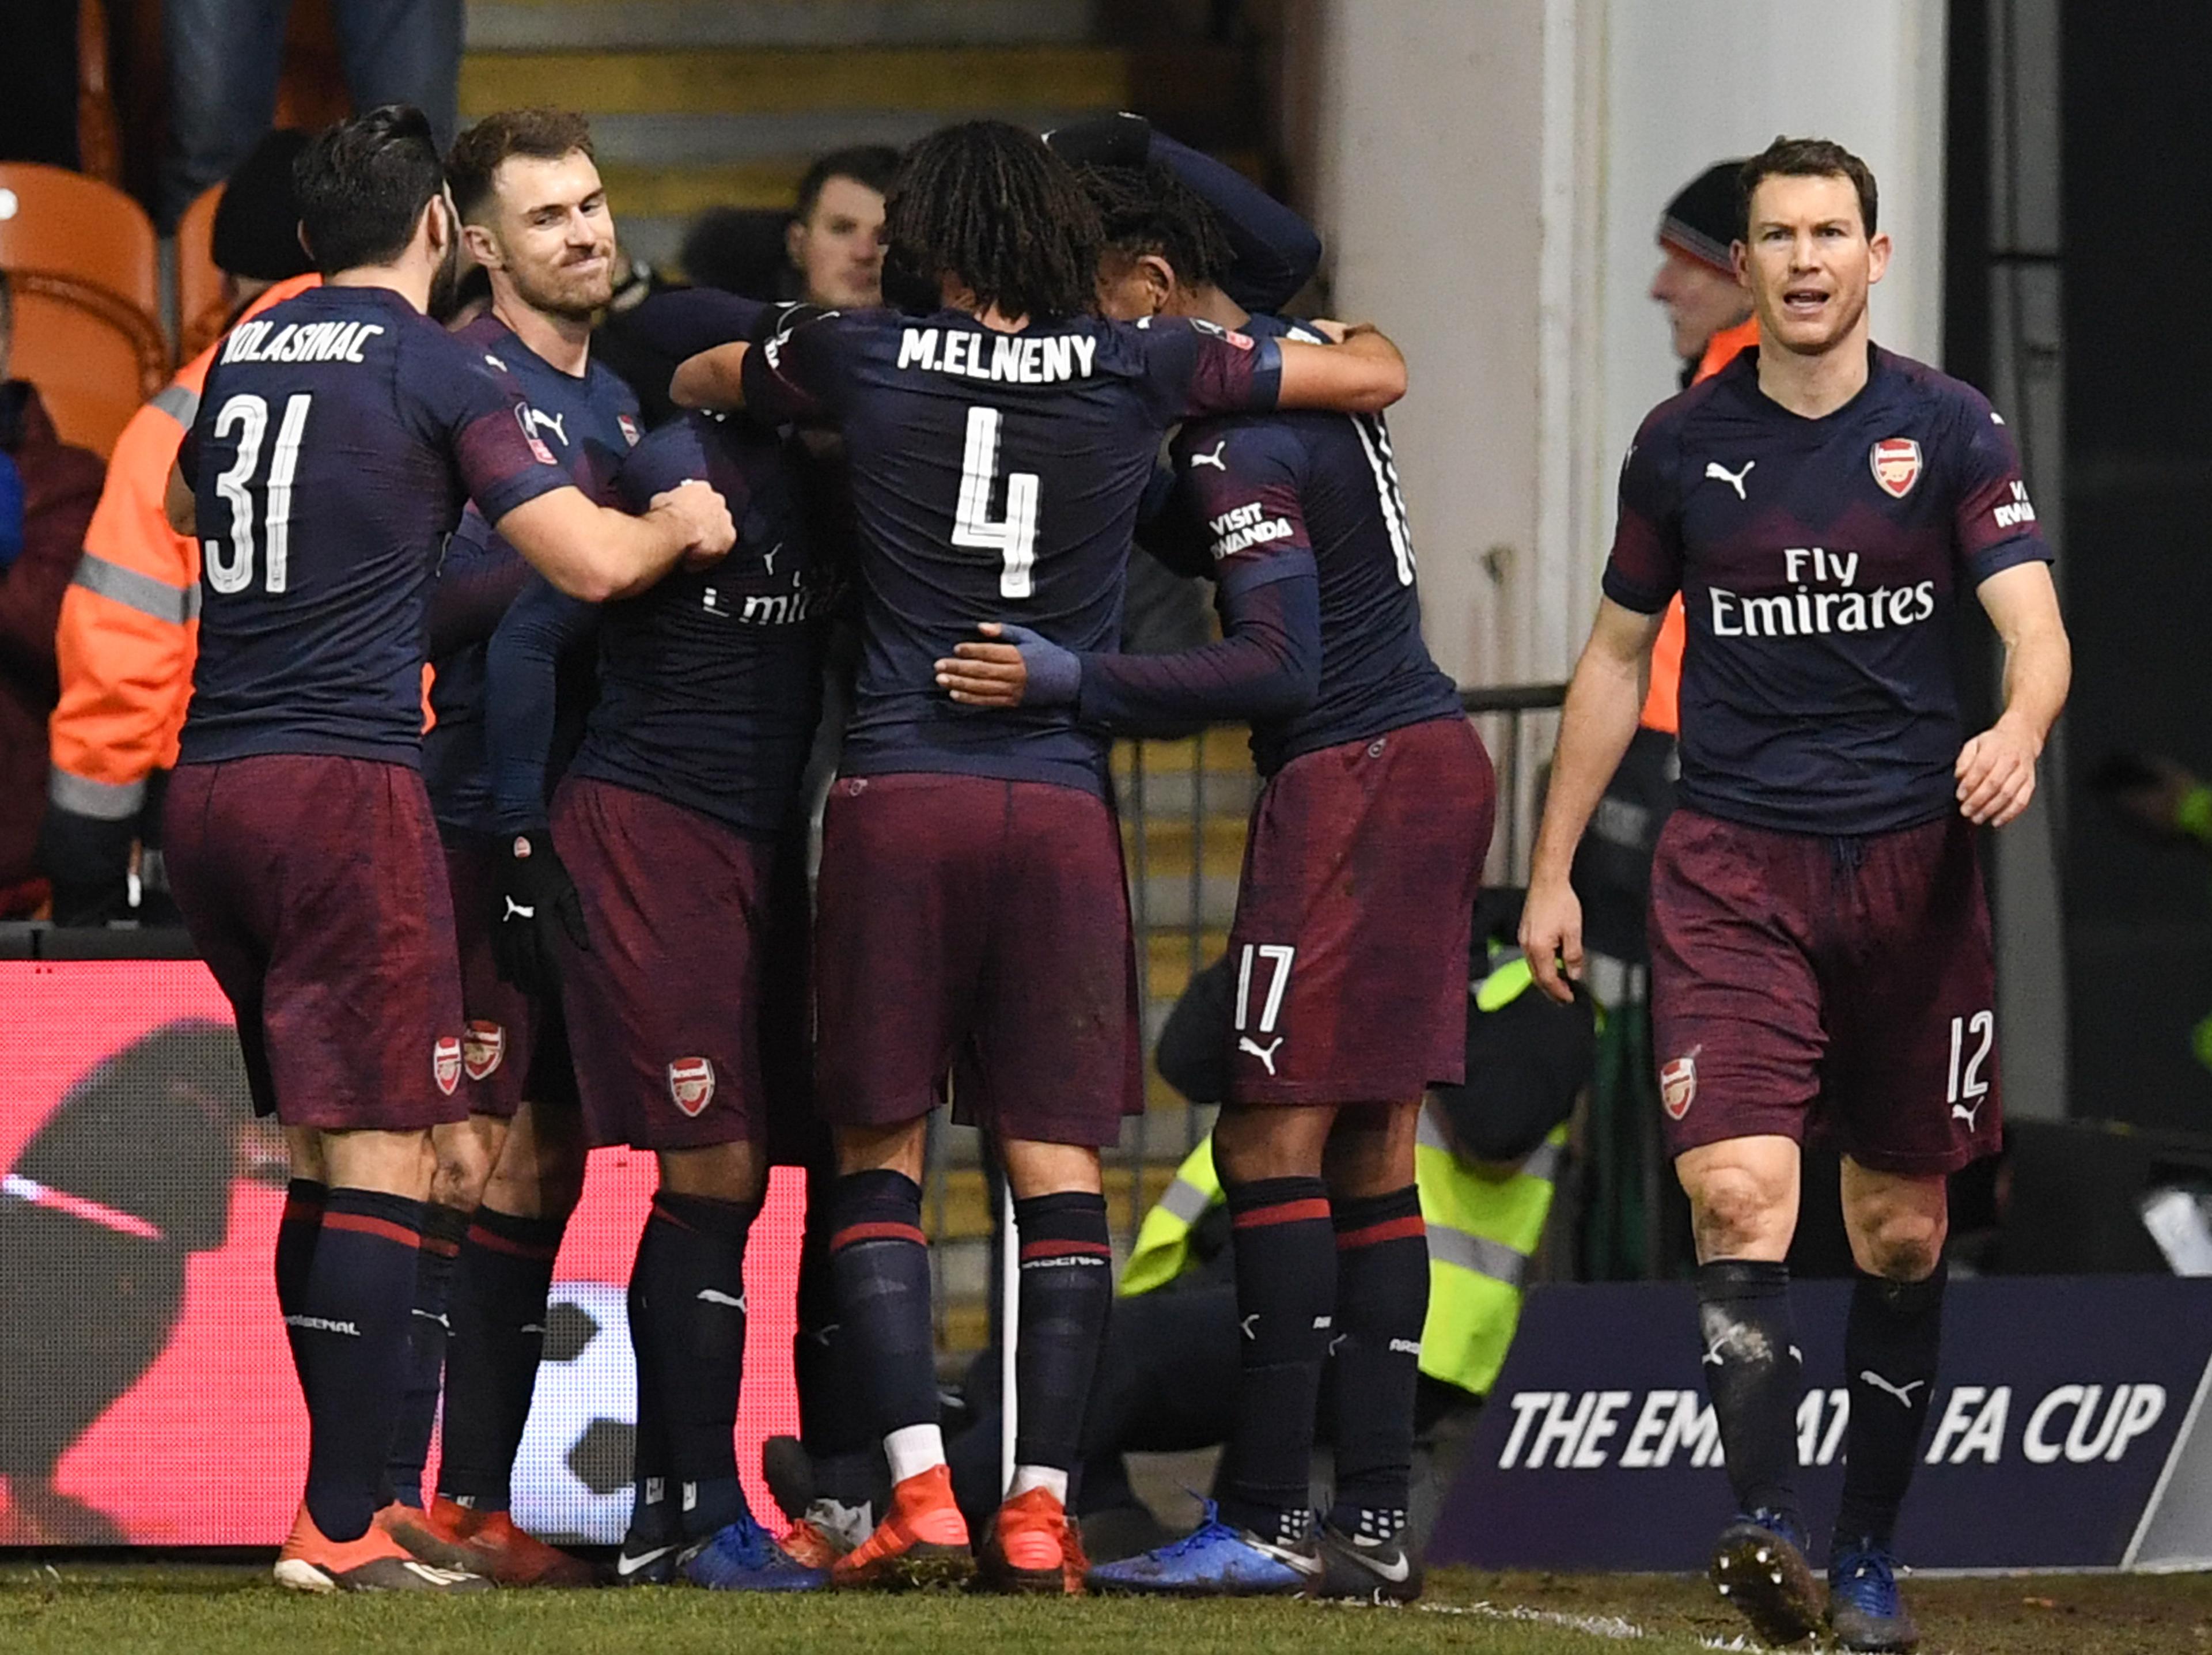 Engleska: Arsenal prošao u narednu rundu FA kupa - Avaz